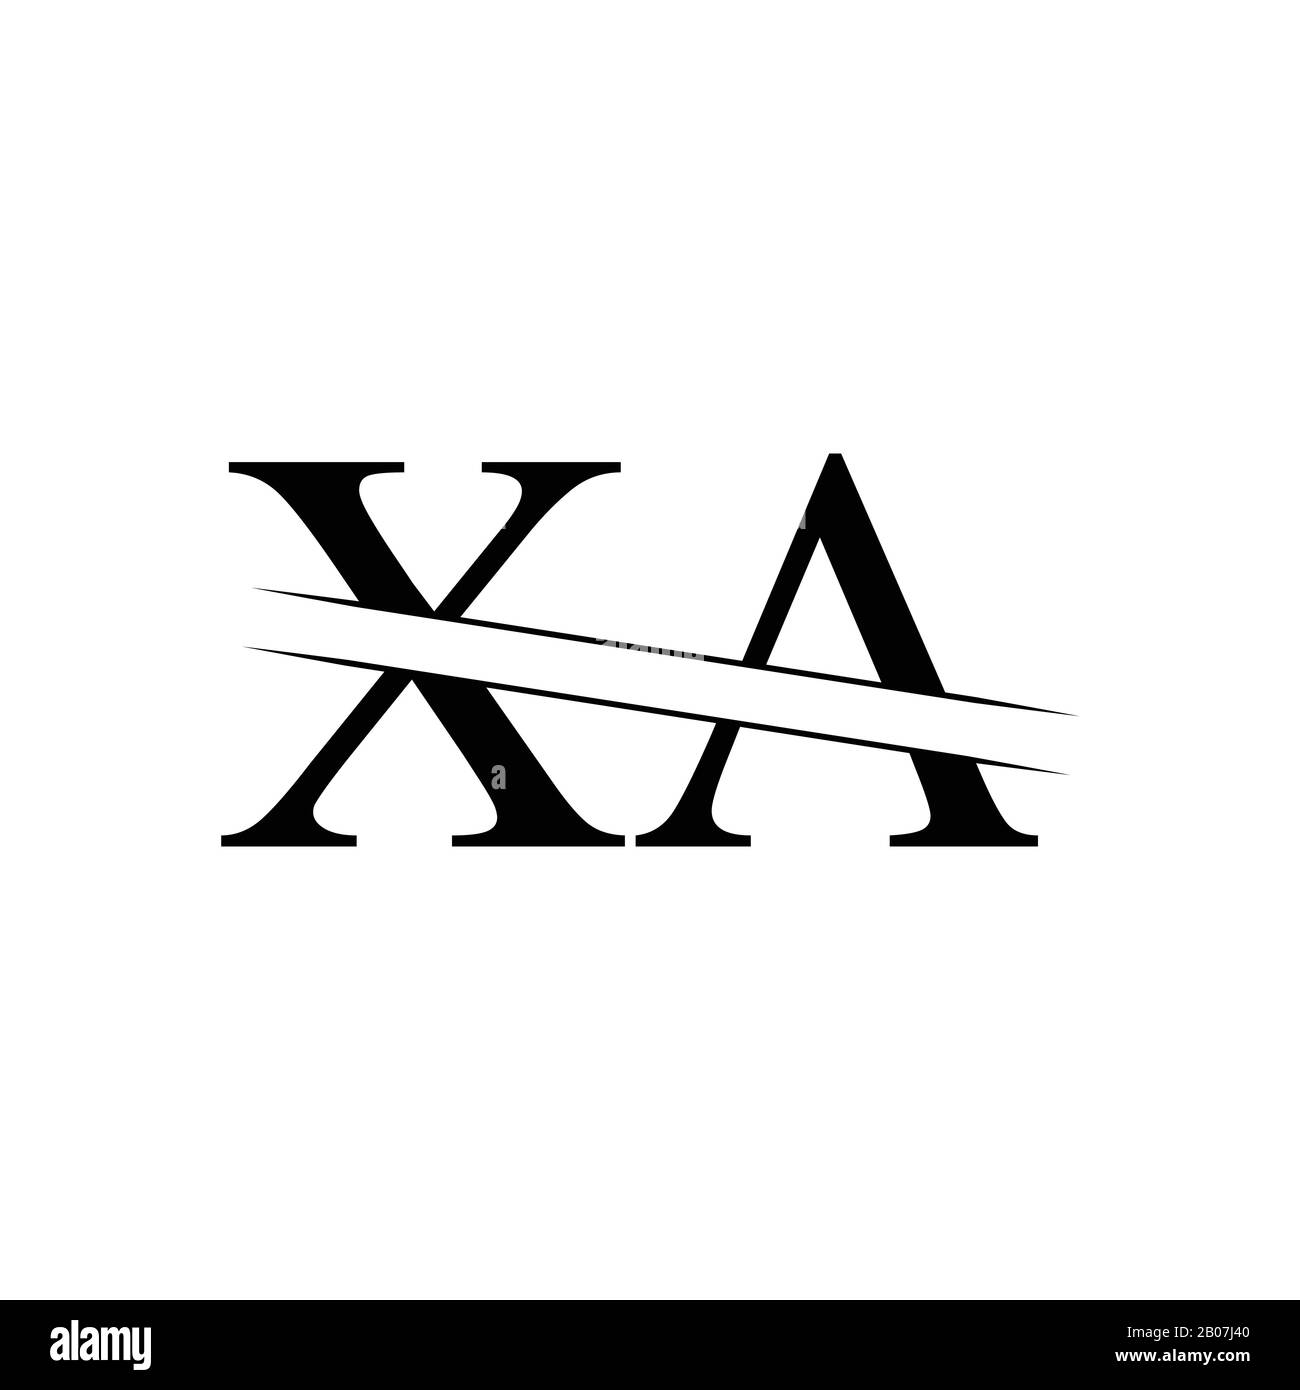 Creative Letter XA Logo Vector With black Colors. Abstract Linked Letter XA Logo Design Stock Vector